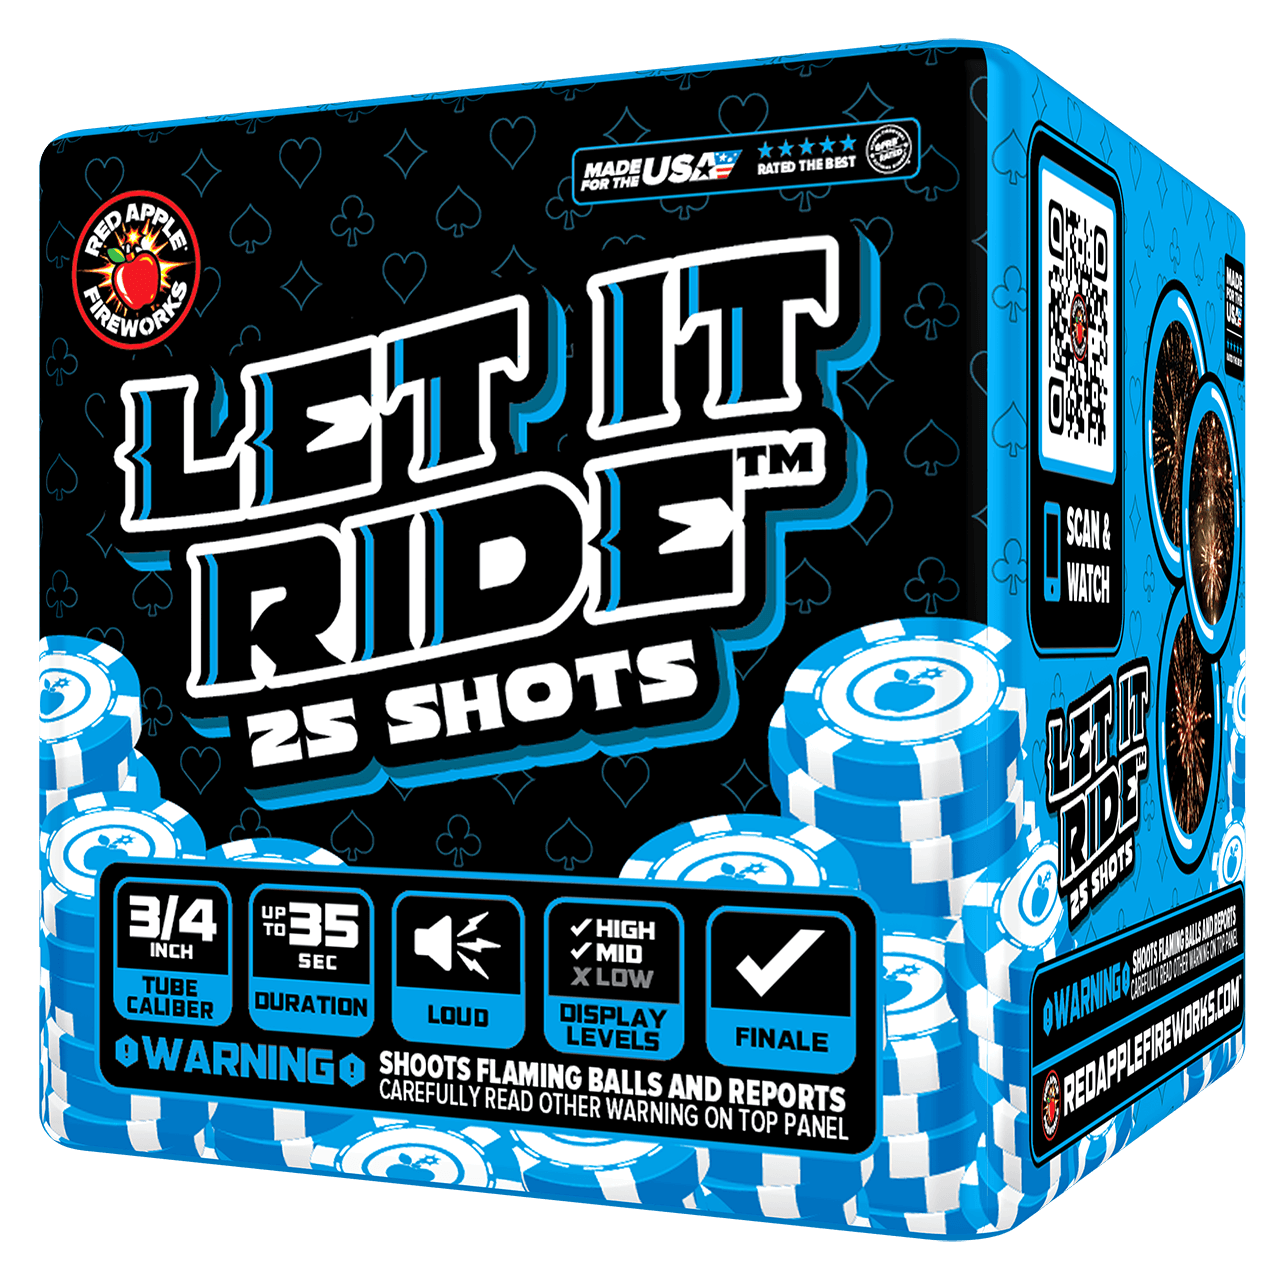 Let it Ride™ 25 Shot Standard Aerials